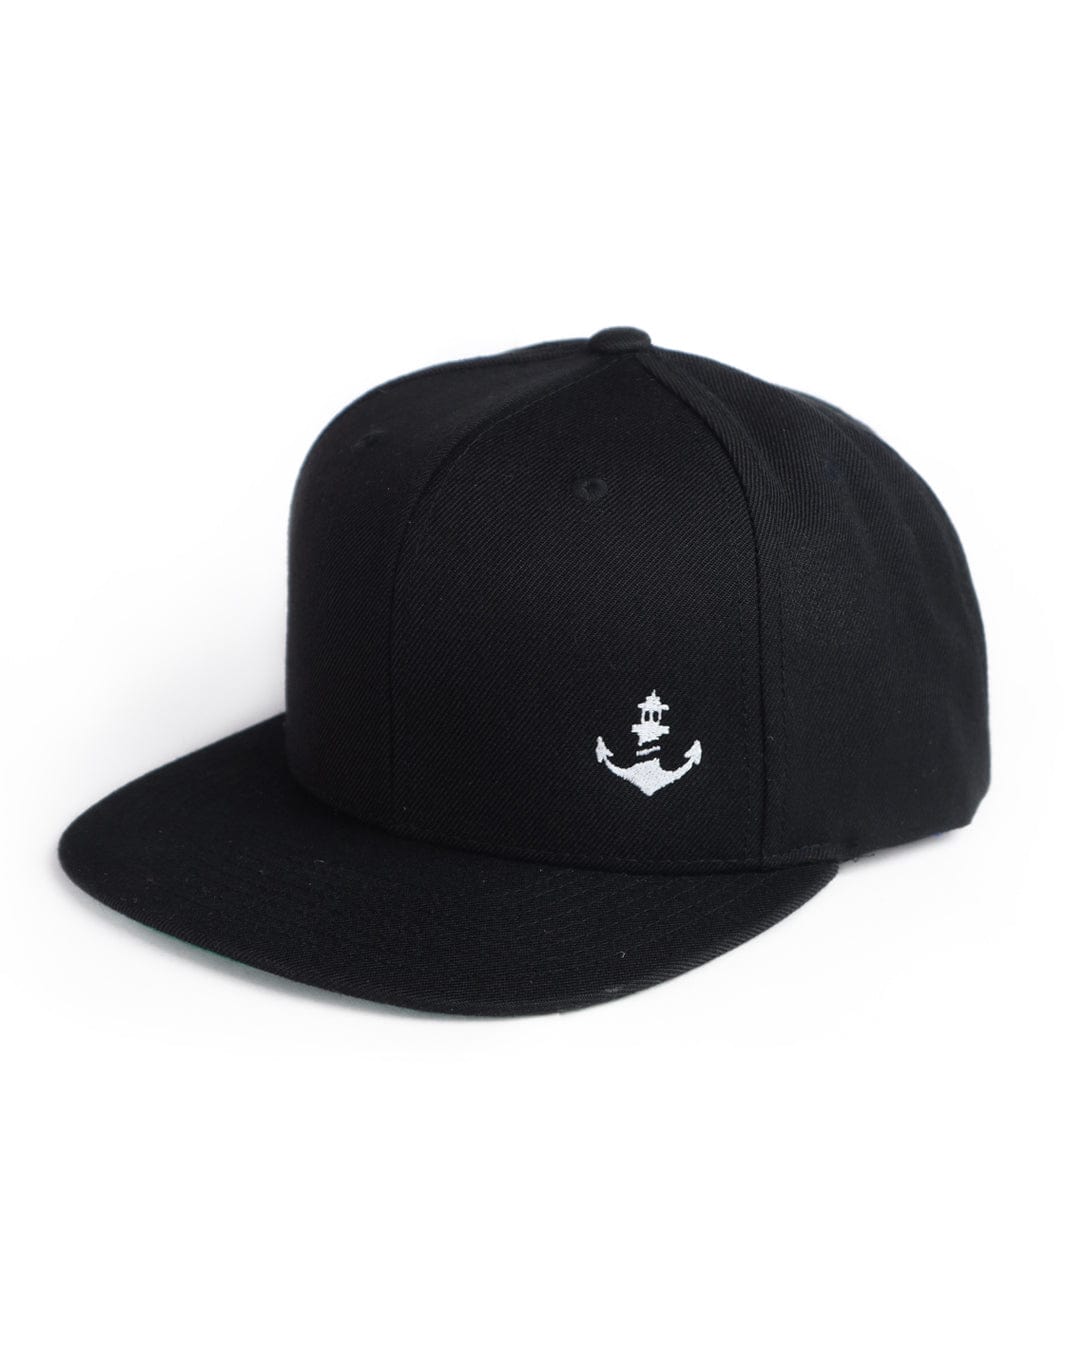 Logo Stitch Snapback Cap - Black/Black